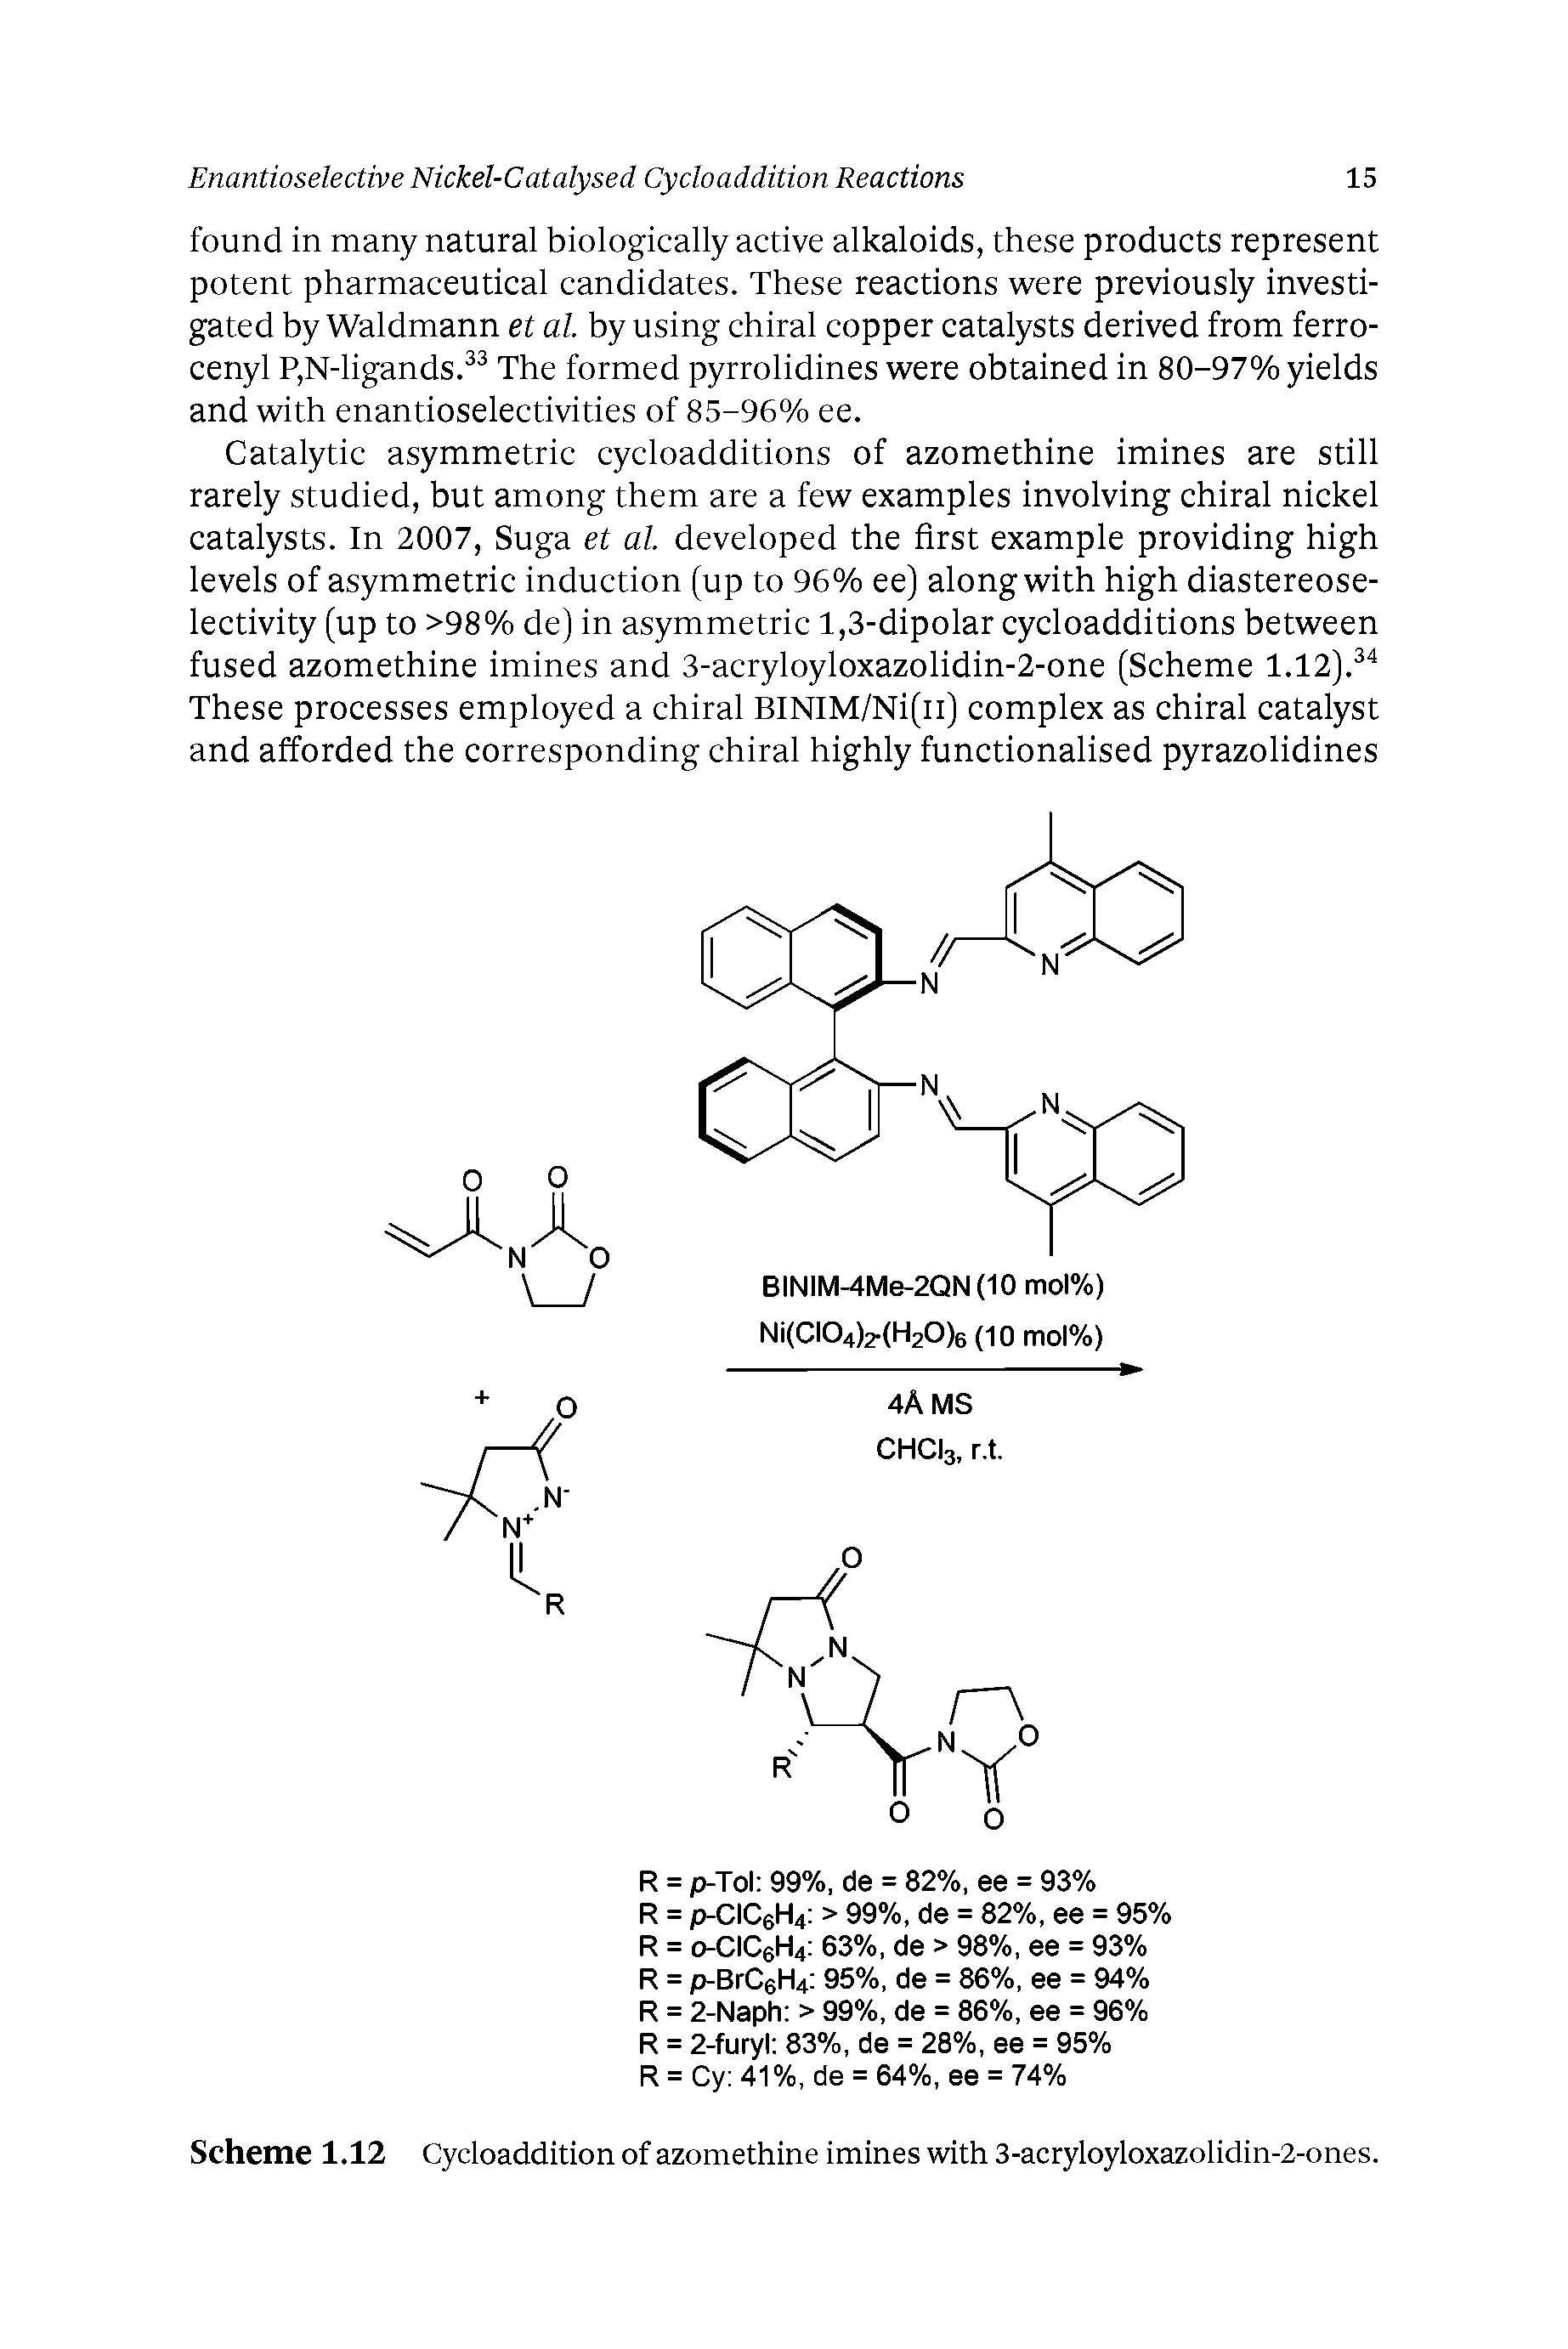 Scheme 1.12 Cycloaddition of azomethine imines with 3-acryloyloxazolidin-2-ones.